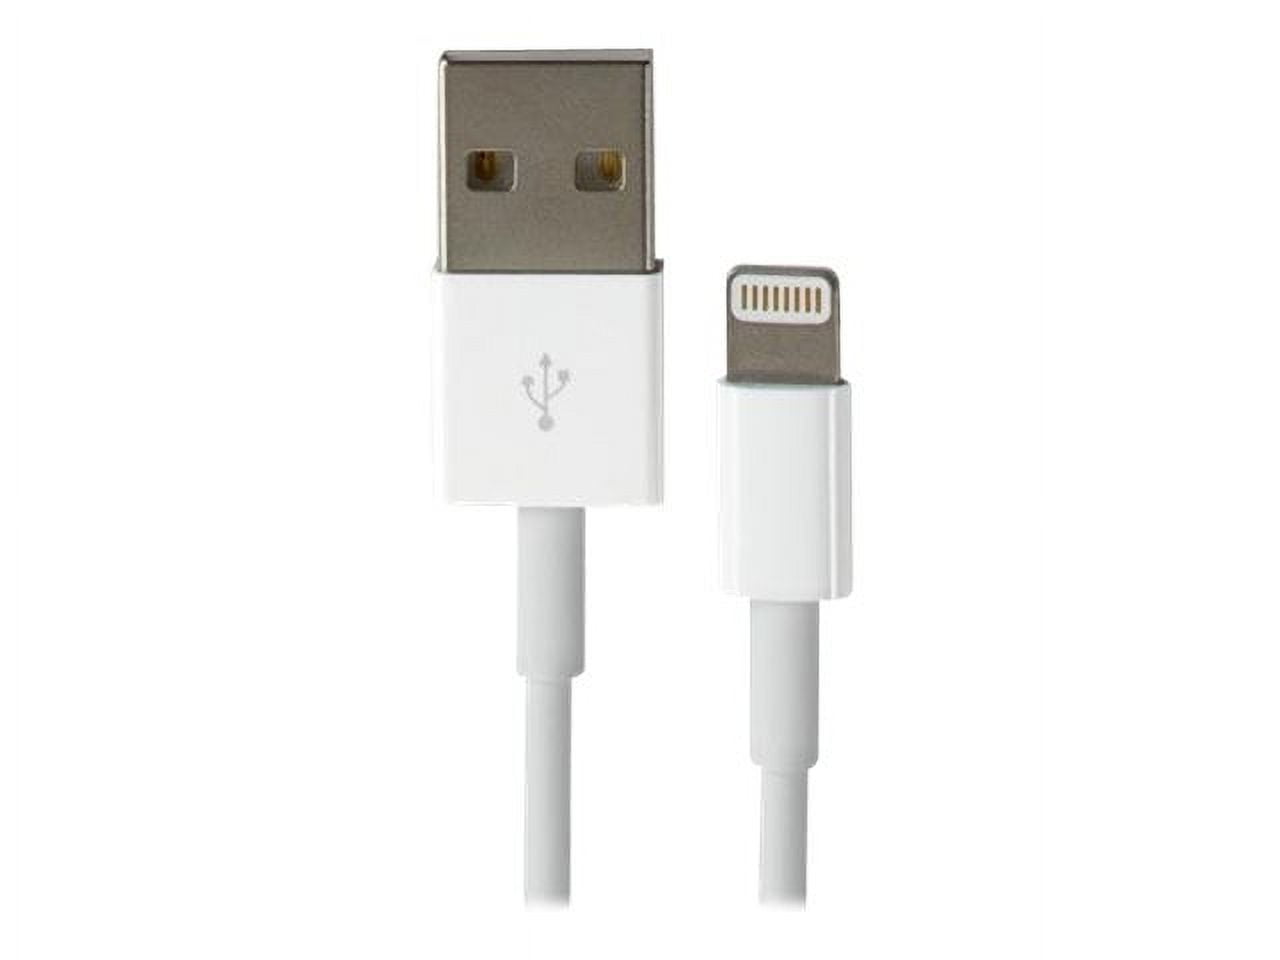 Original Apple Lightning to USB Cable for iPhone 5,6,7 iPad Mini